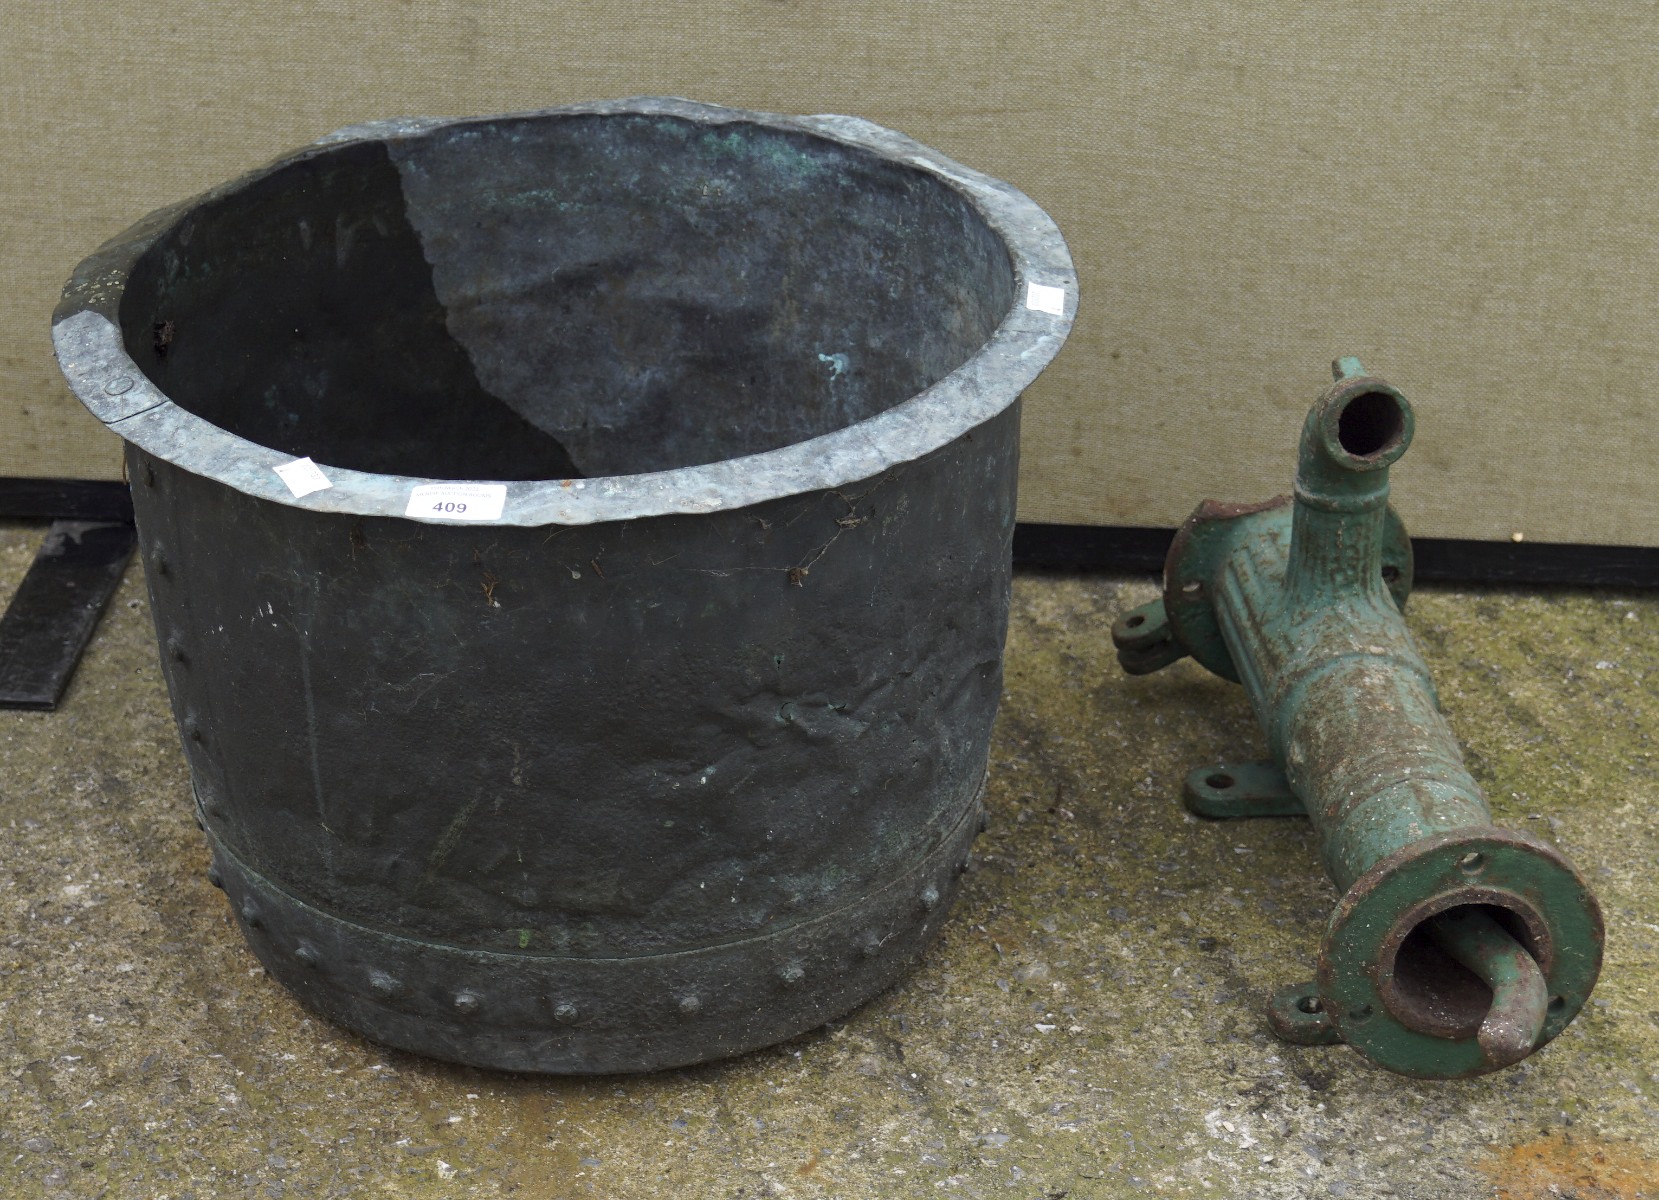 An antique metal pot and a water pump, both cast metal,